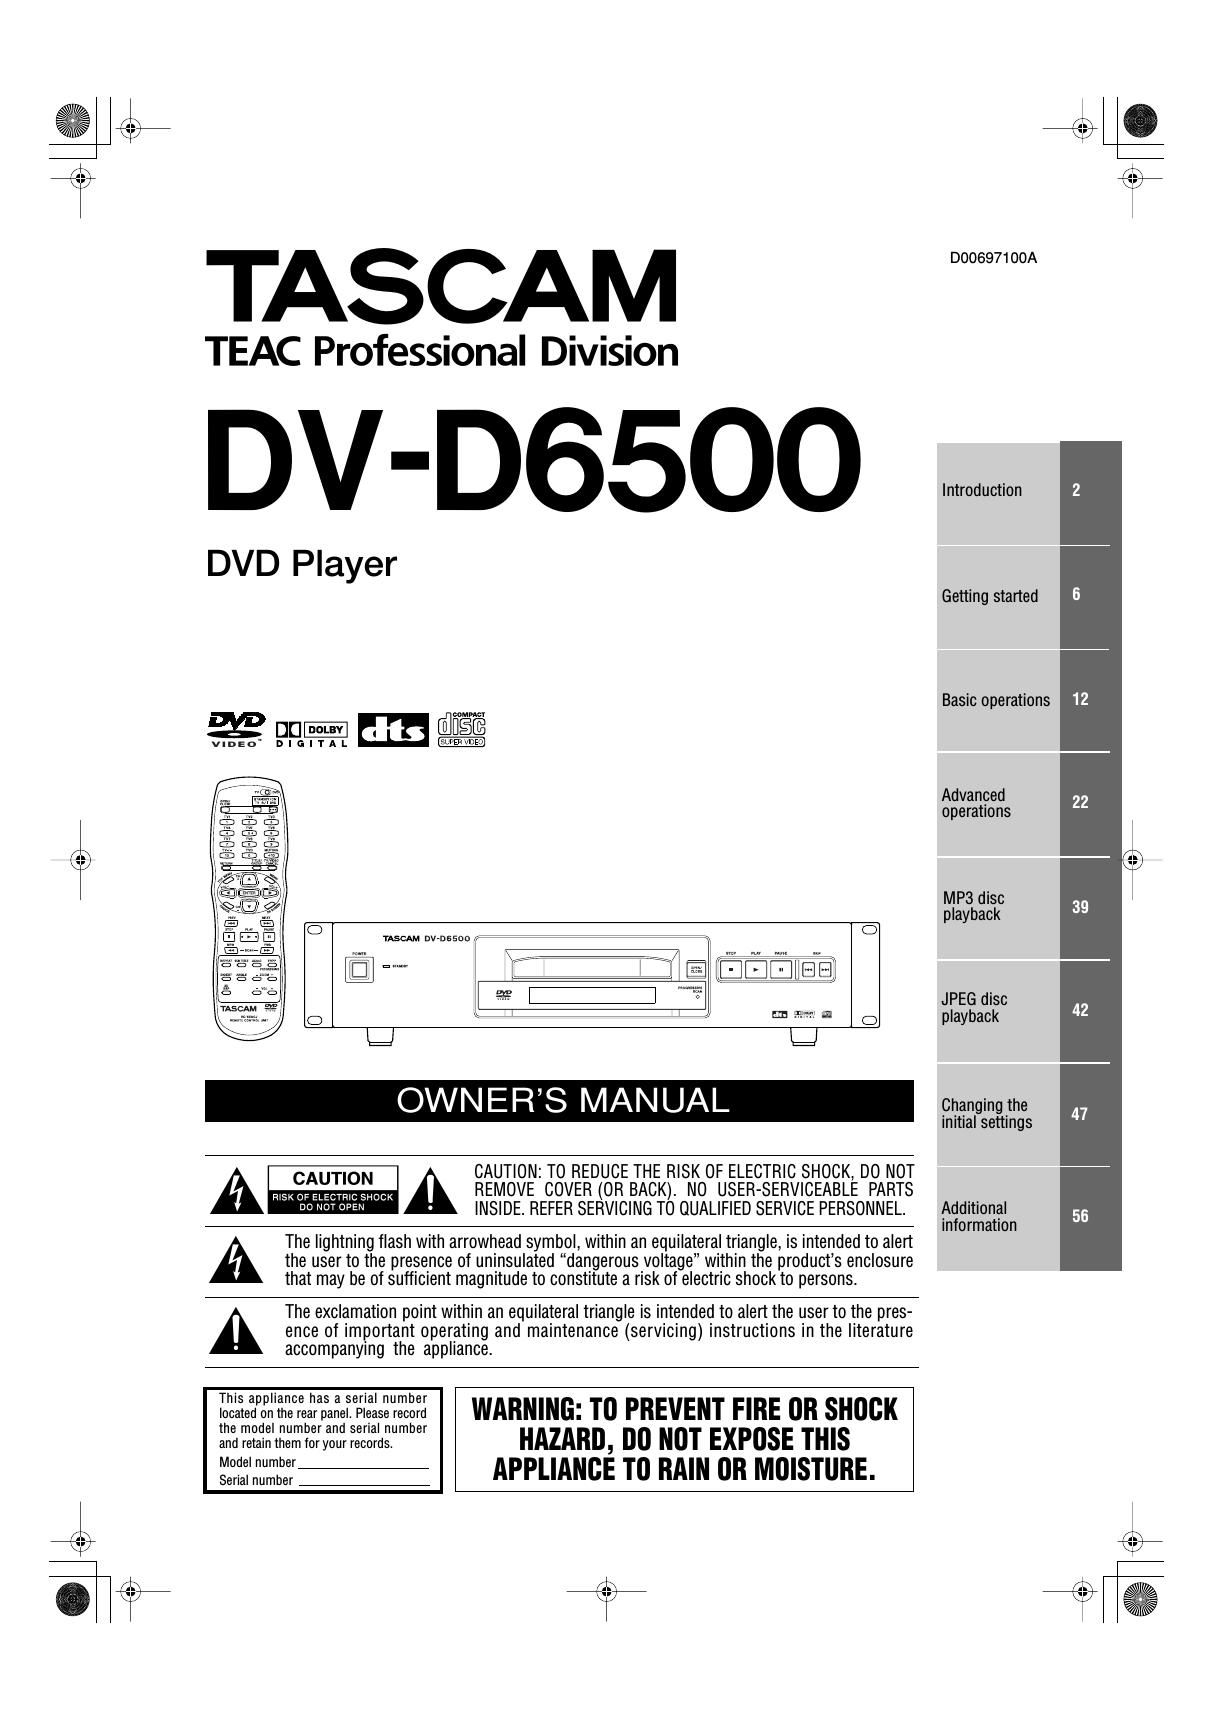 Tascam DV D6500 Owners Manual